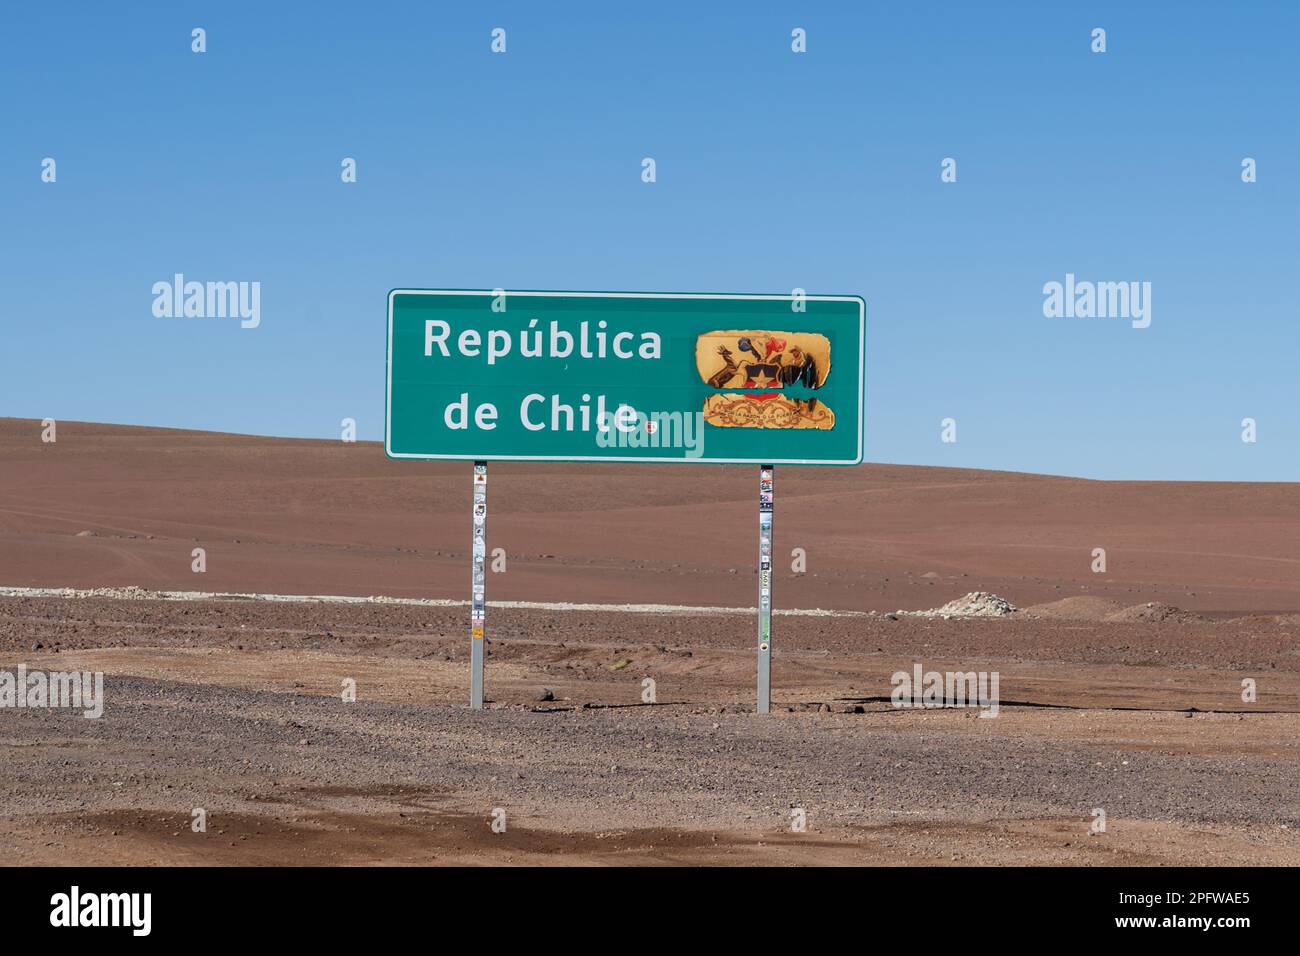 Laguna verde, Chile - February 22, 2023: Republic of Chile (Republica de Chile ) border sign at the border between Bolivia and Chile near Laguna verde Stock Photo